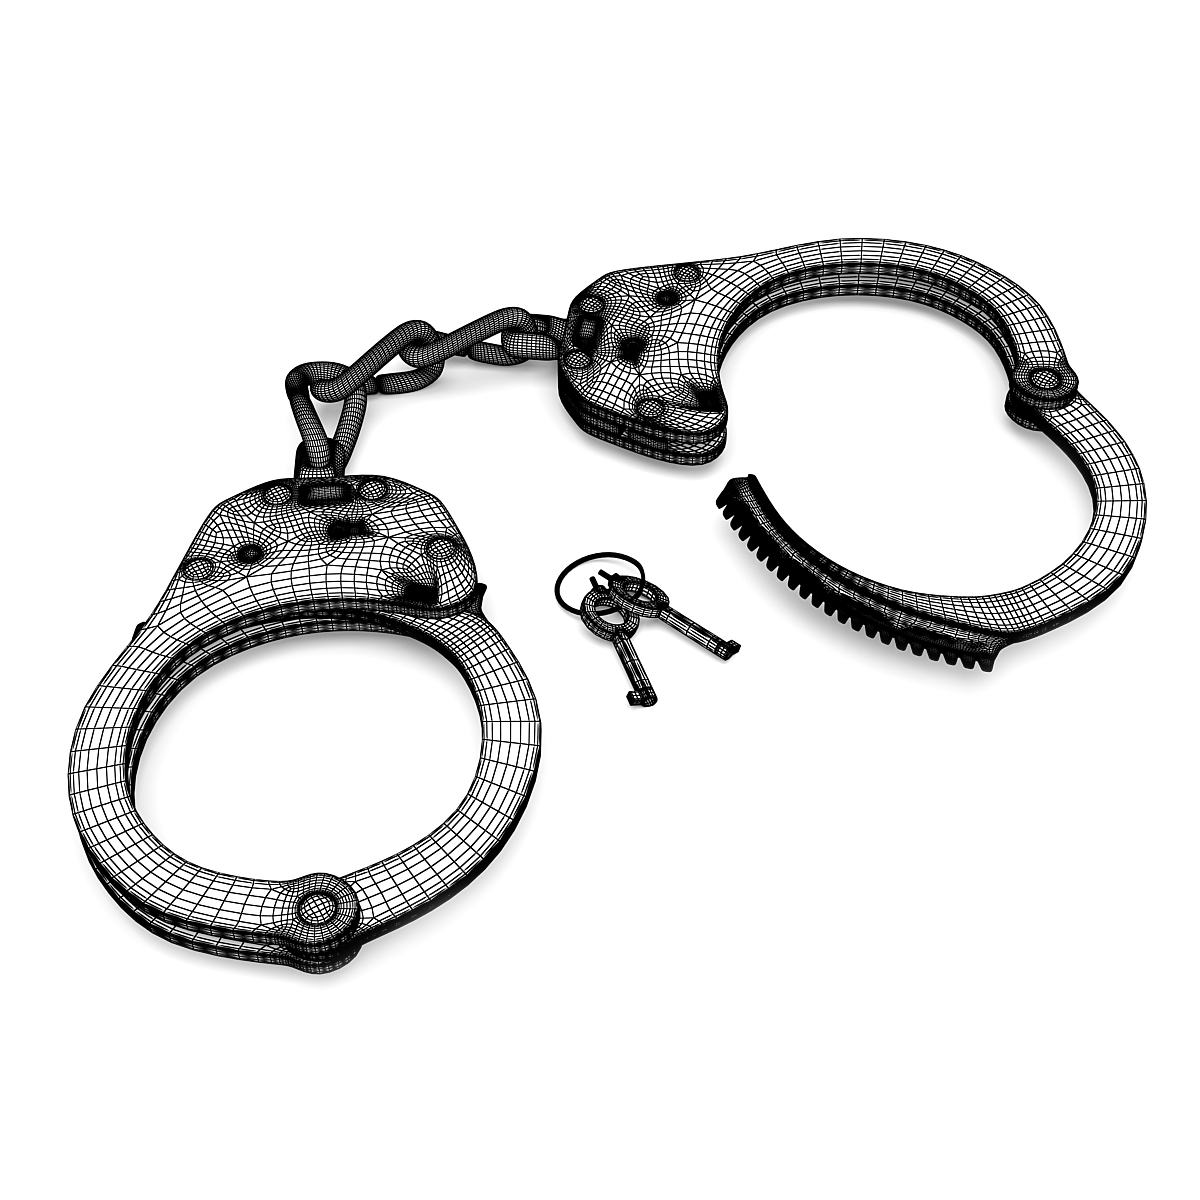 Police Handcuffs Clipart